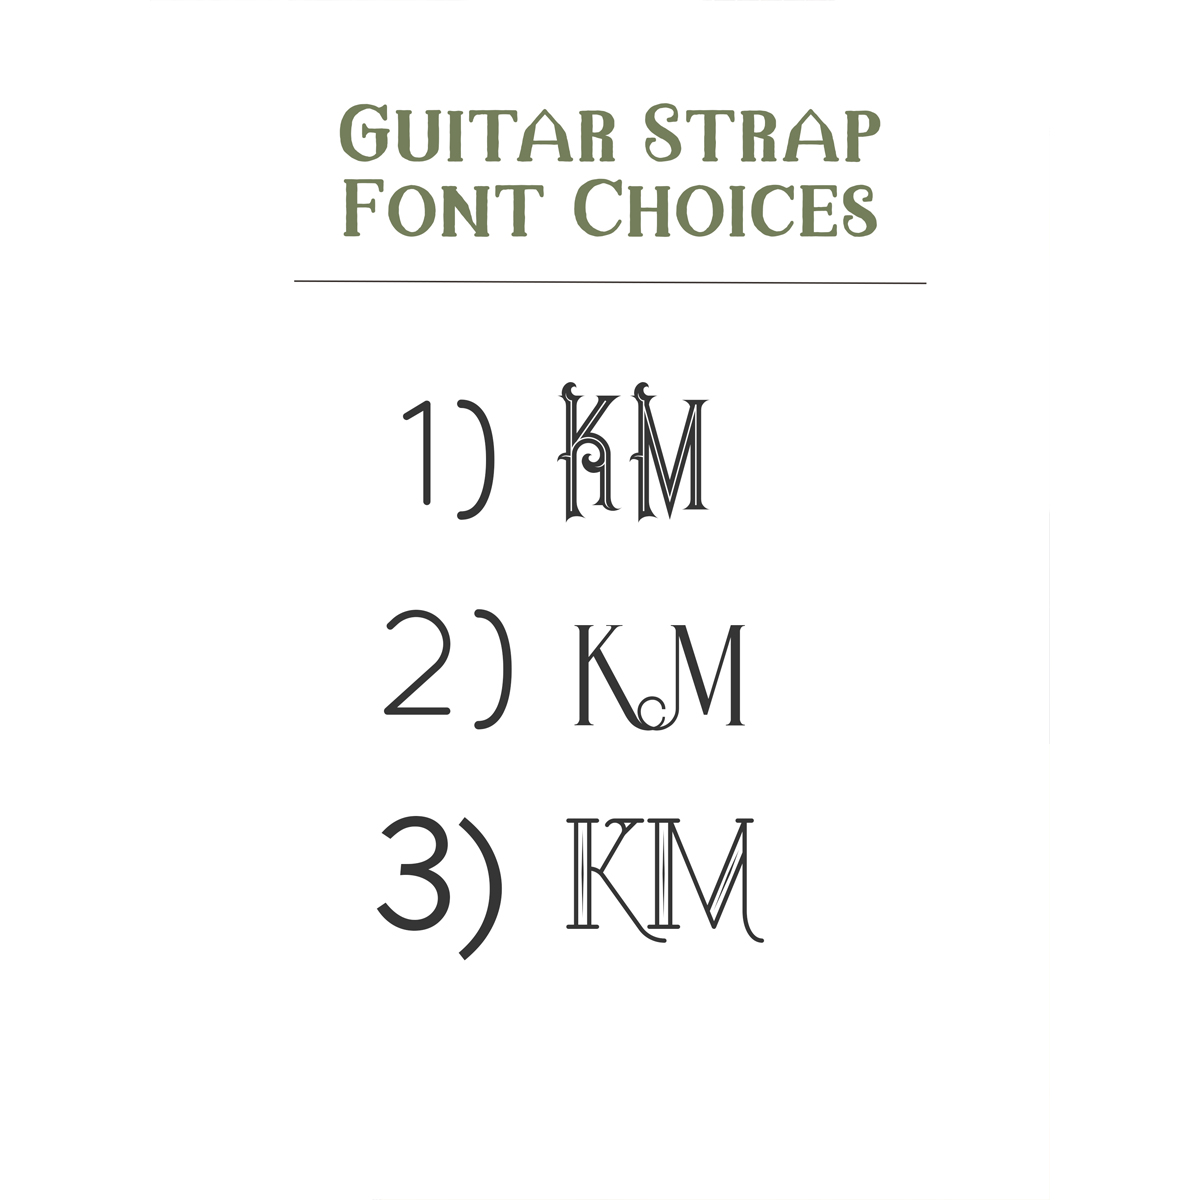 Flower Guitar Strap Font Options